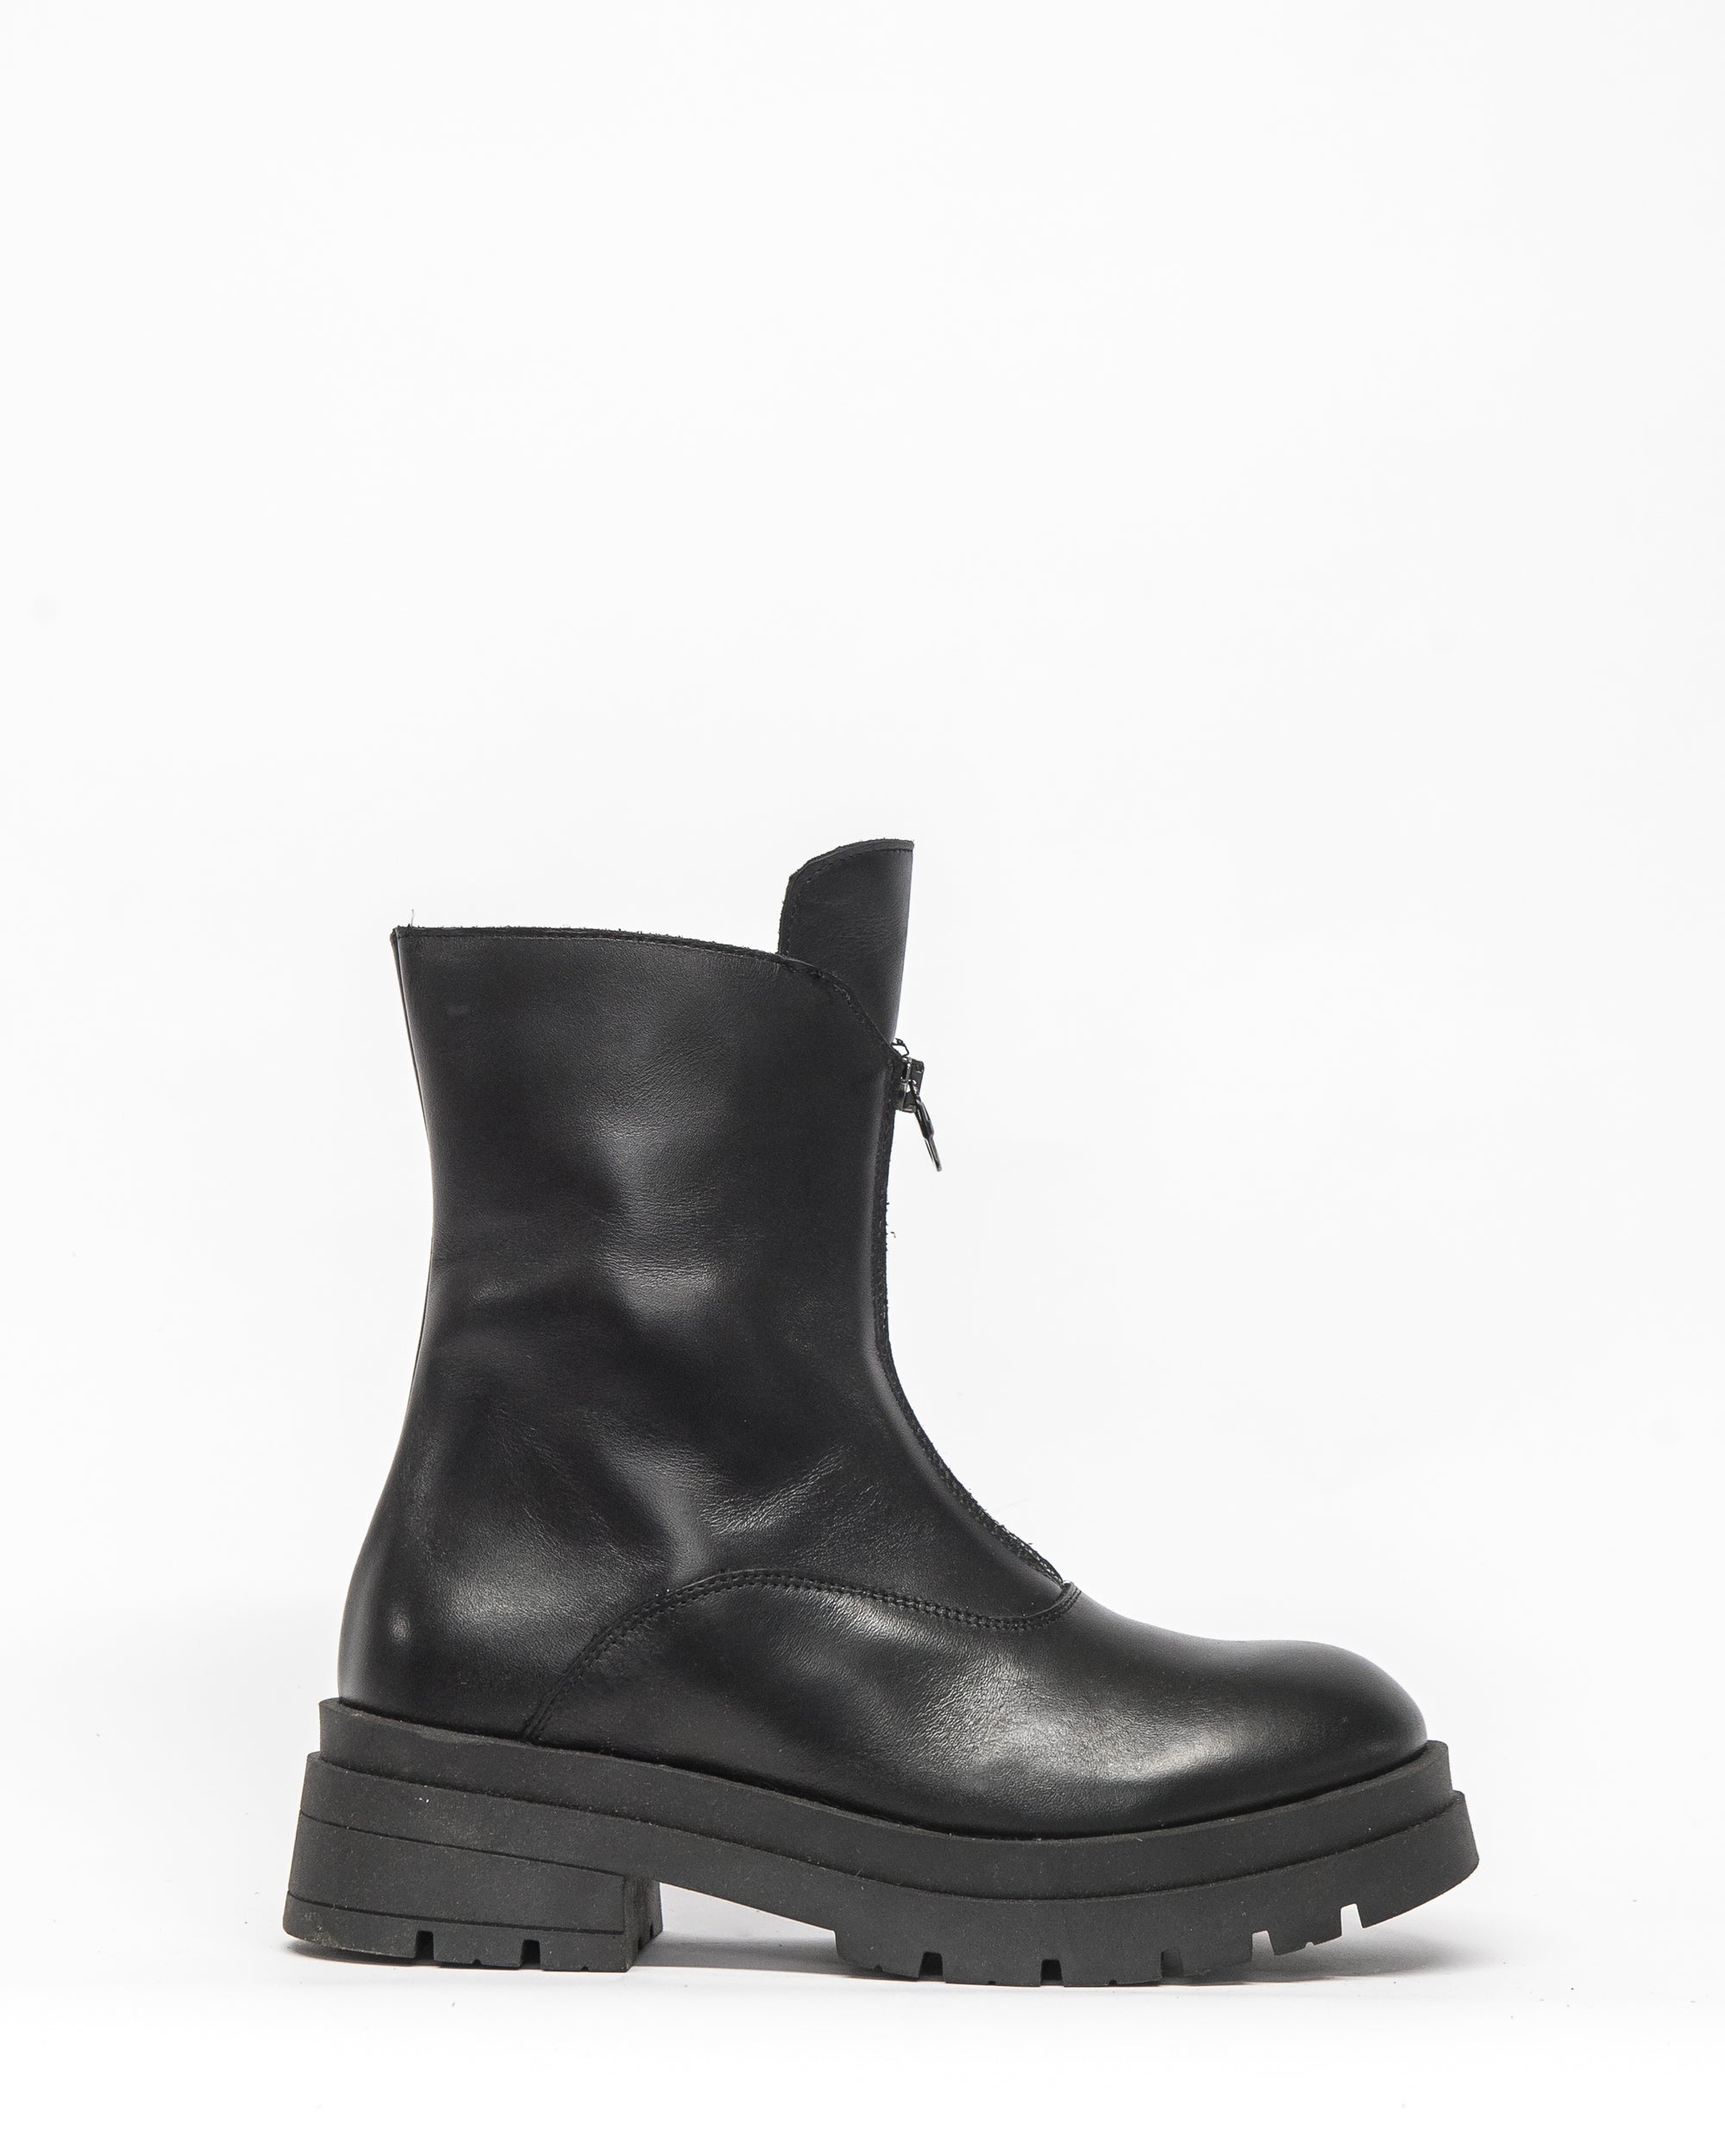 buy quaver boot - black leather | zoe kratzmann